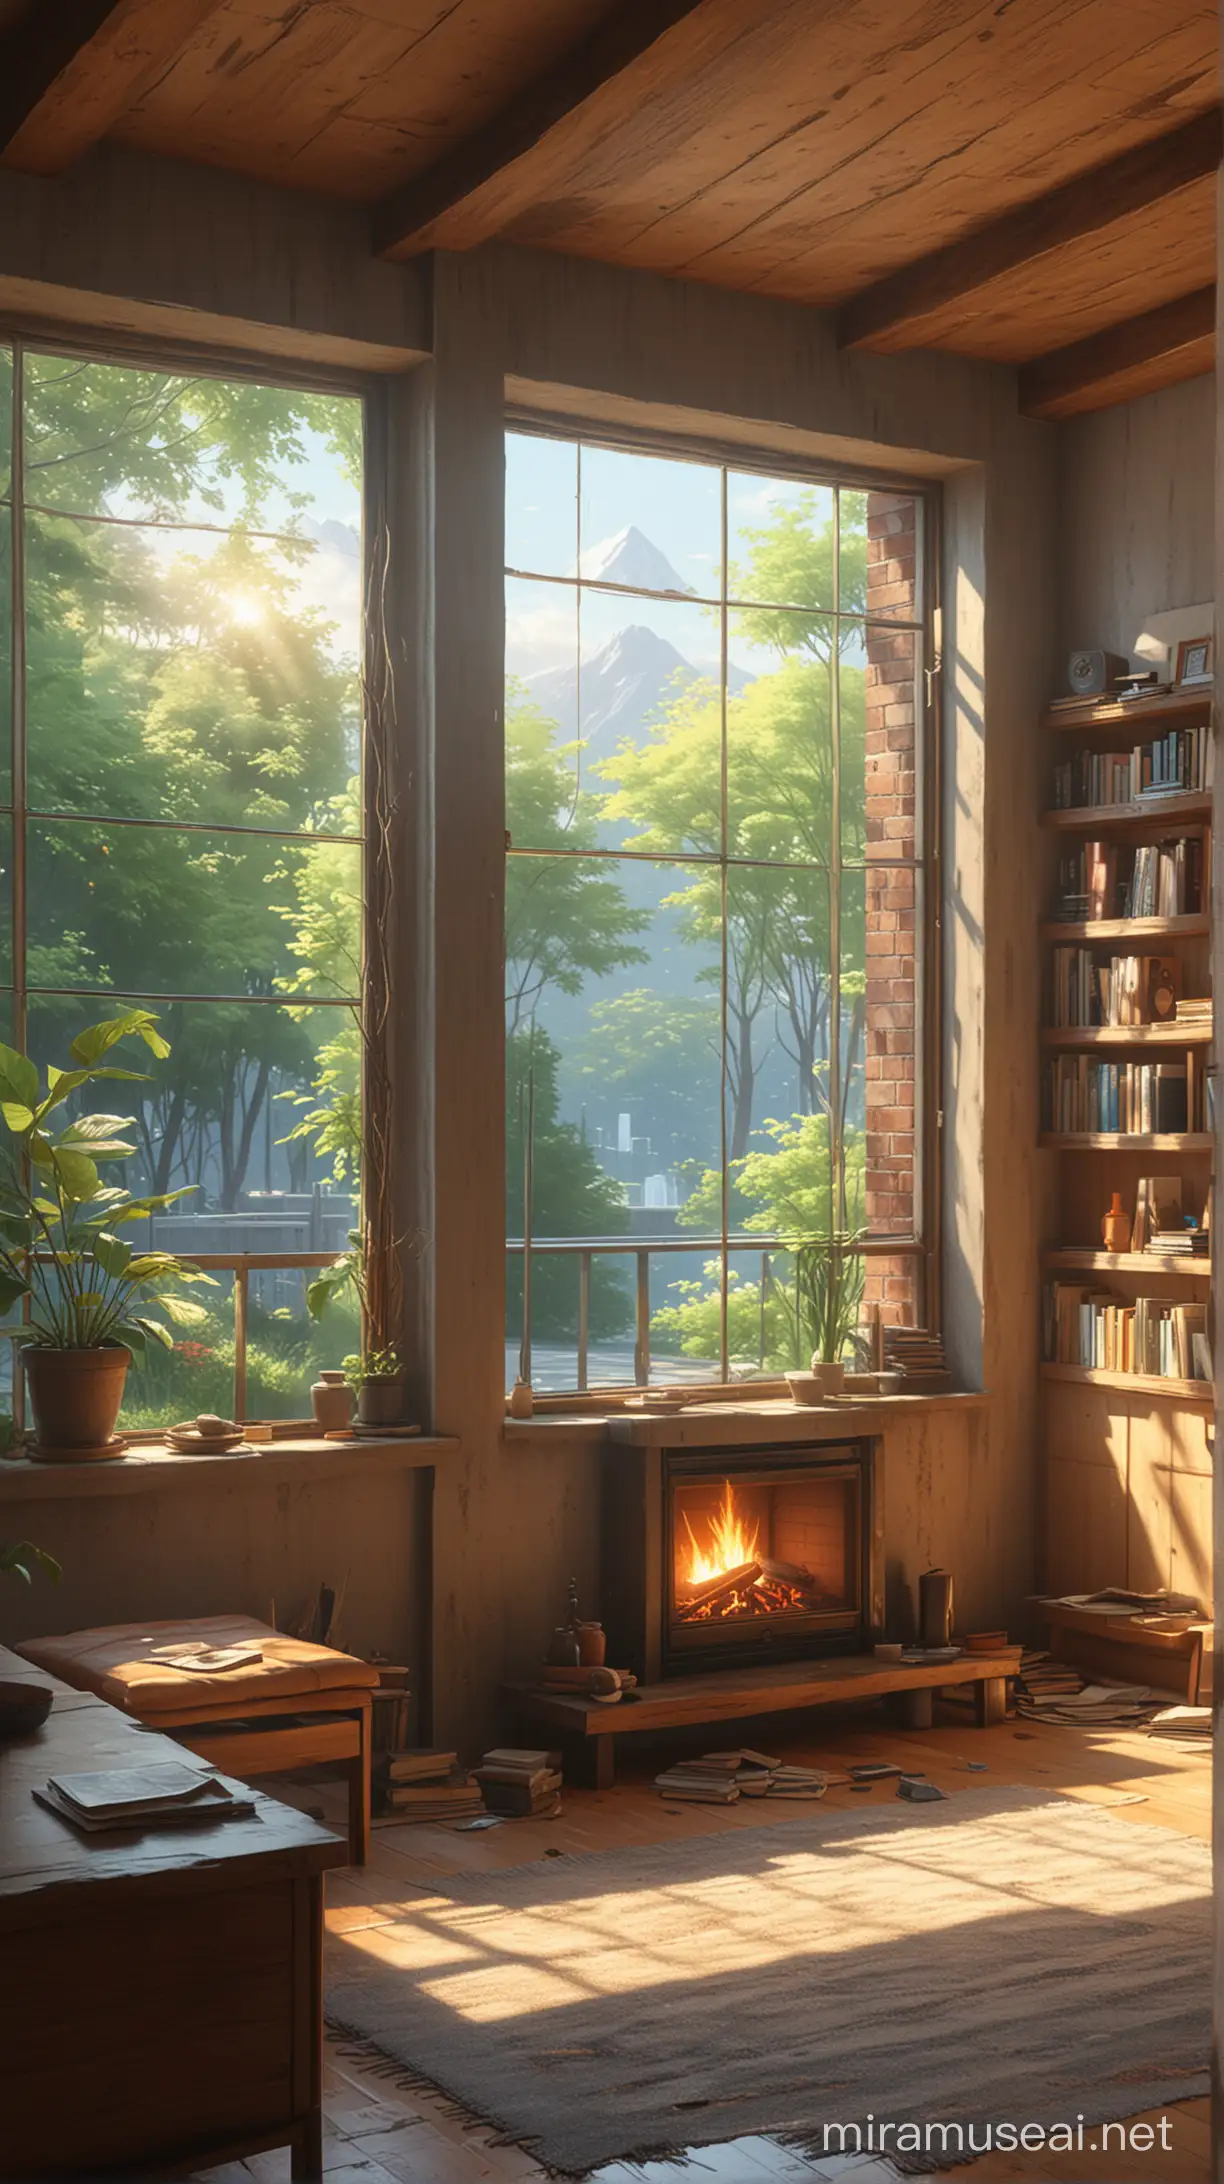 Cozy Fireplace Scene with Sunlight Mystical Illustration in Makoto Shinkai Style